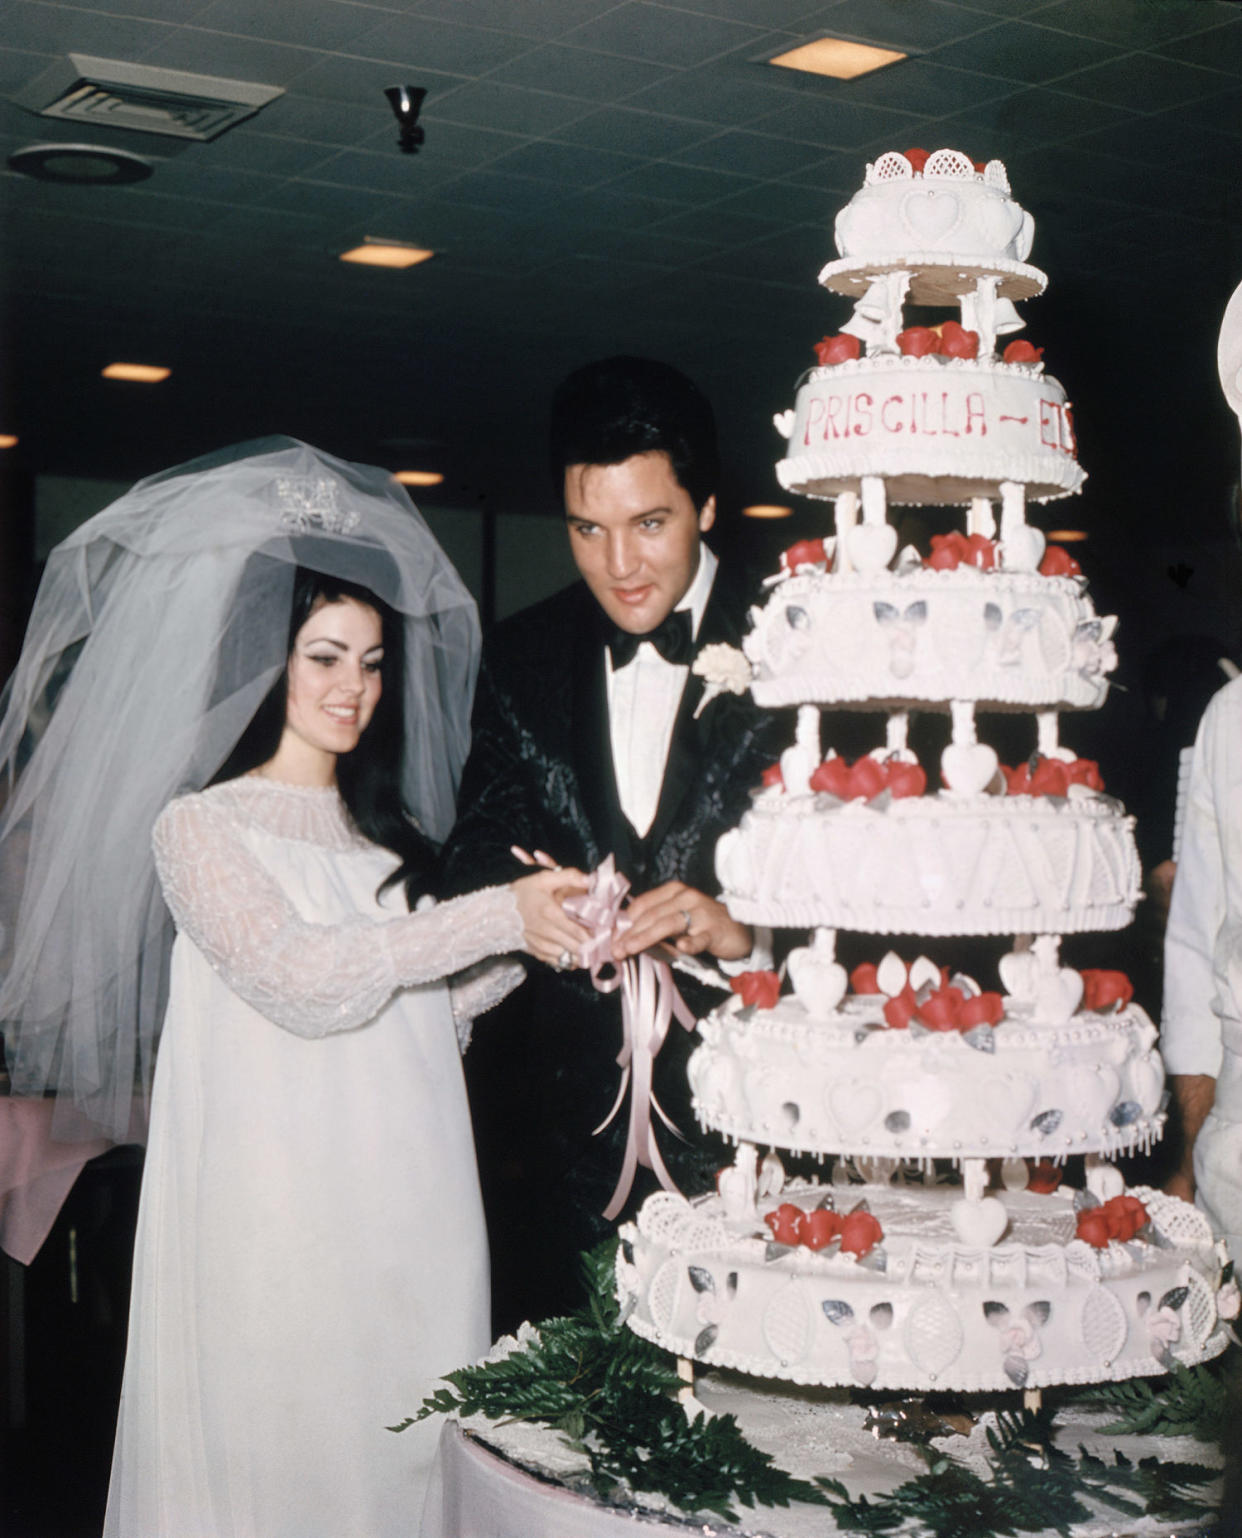 Elvis Presley cuts wedding cake with bride Priscilla Presley in May 1, 1967, in Las Vegas. (Bettmann Archive / Getty Images)